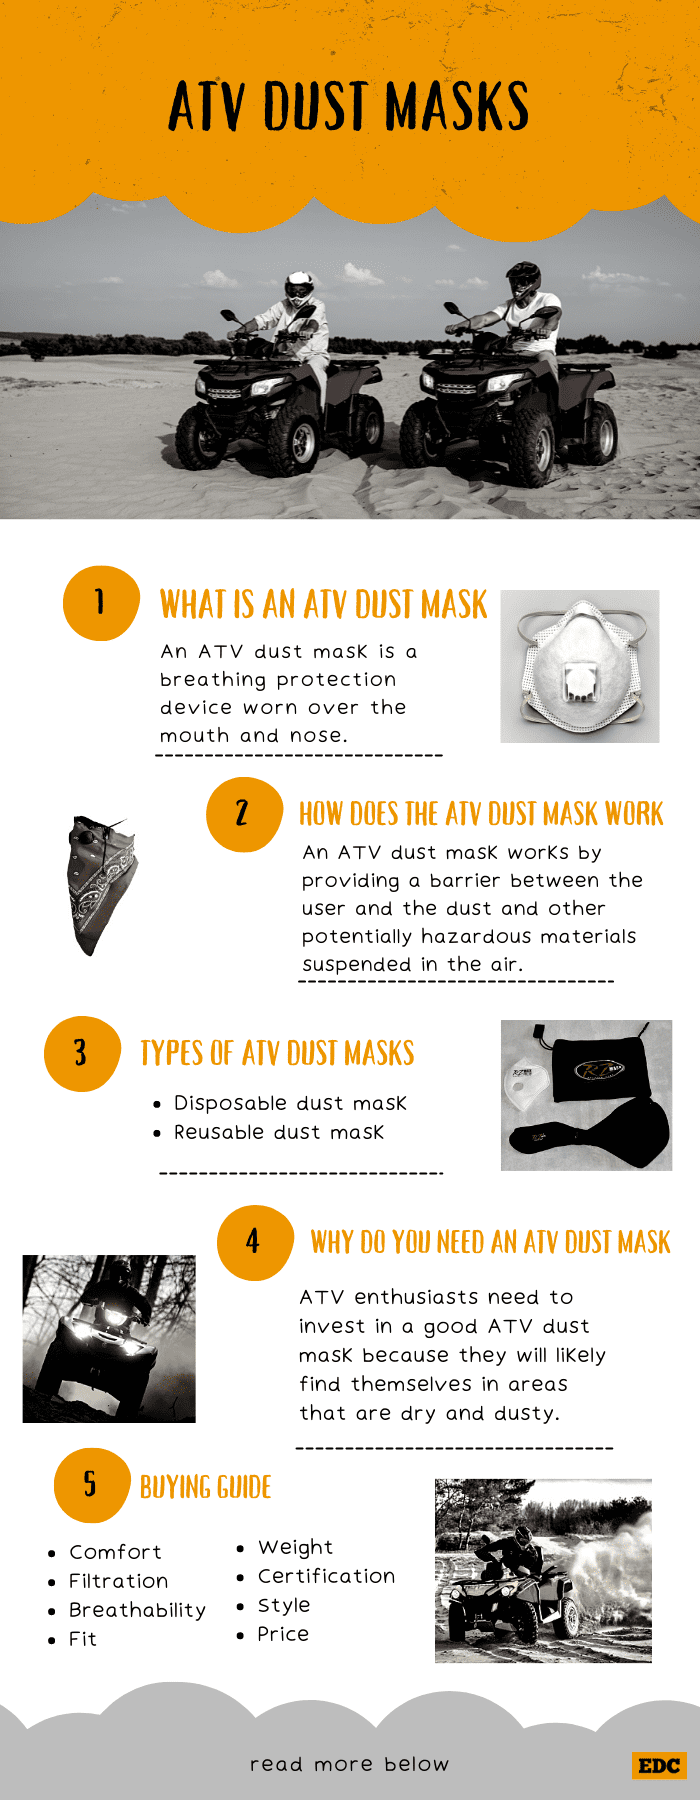 atv-dust-masks